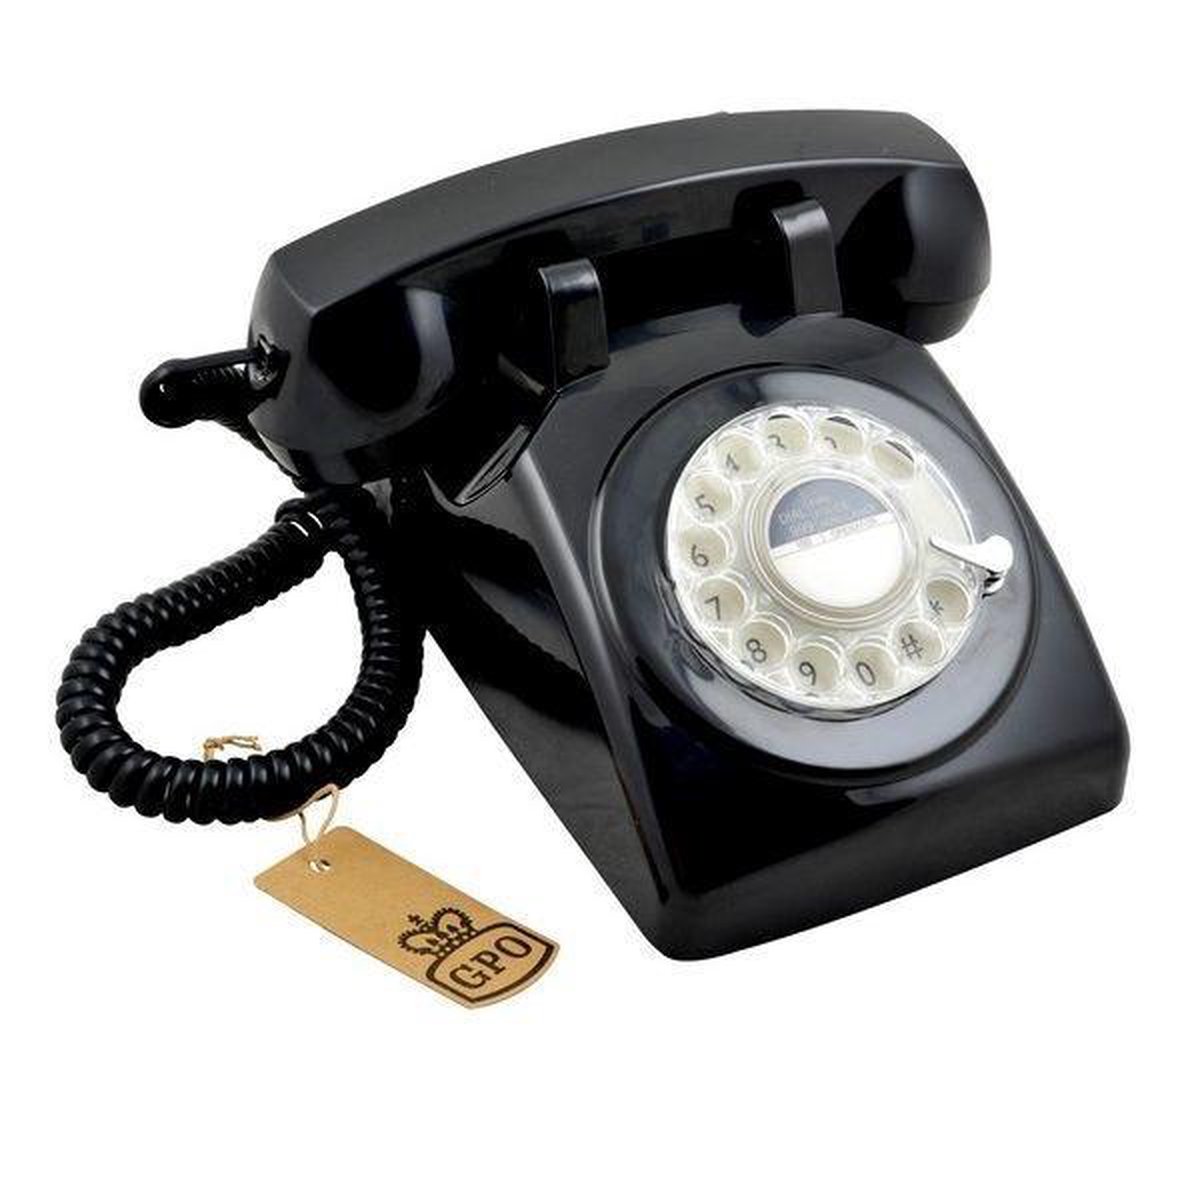 GPO 746ROTARYBLA - Telefoon retro jaren '70, draaischijf, zwart | bol.com